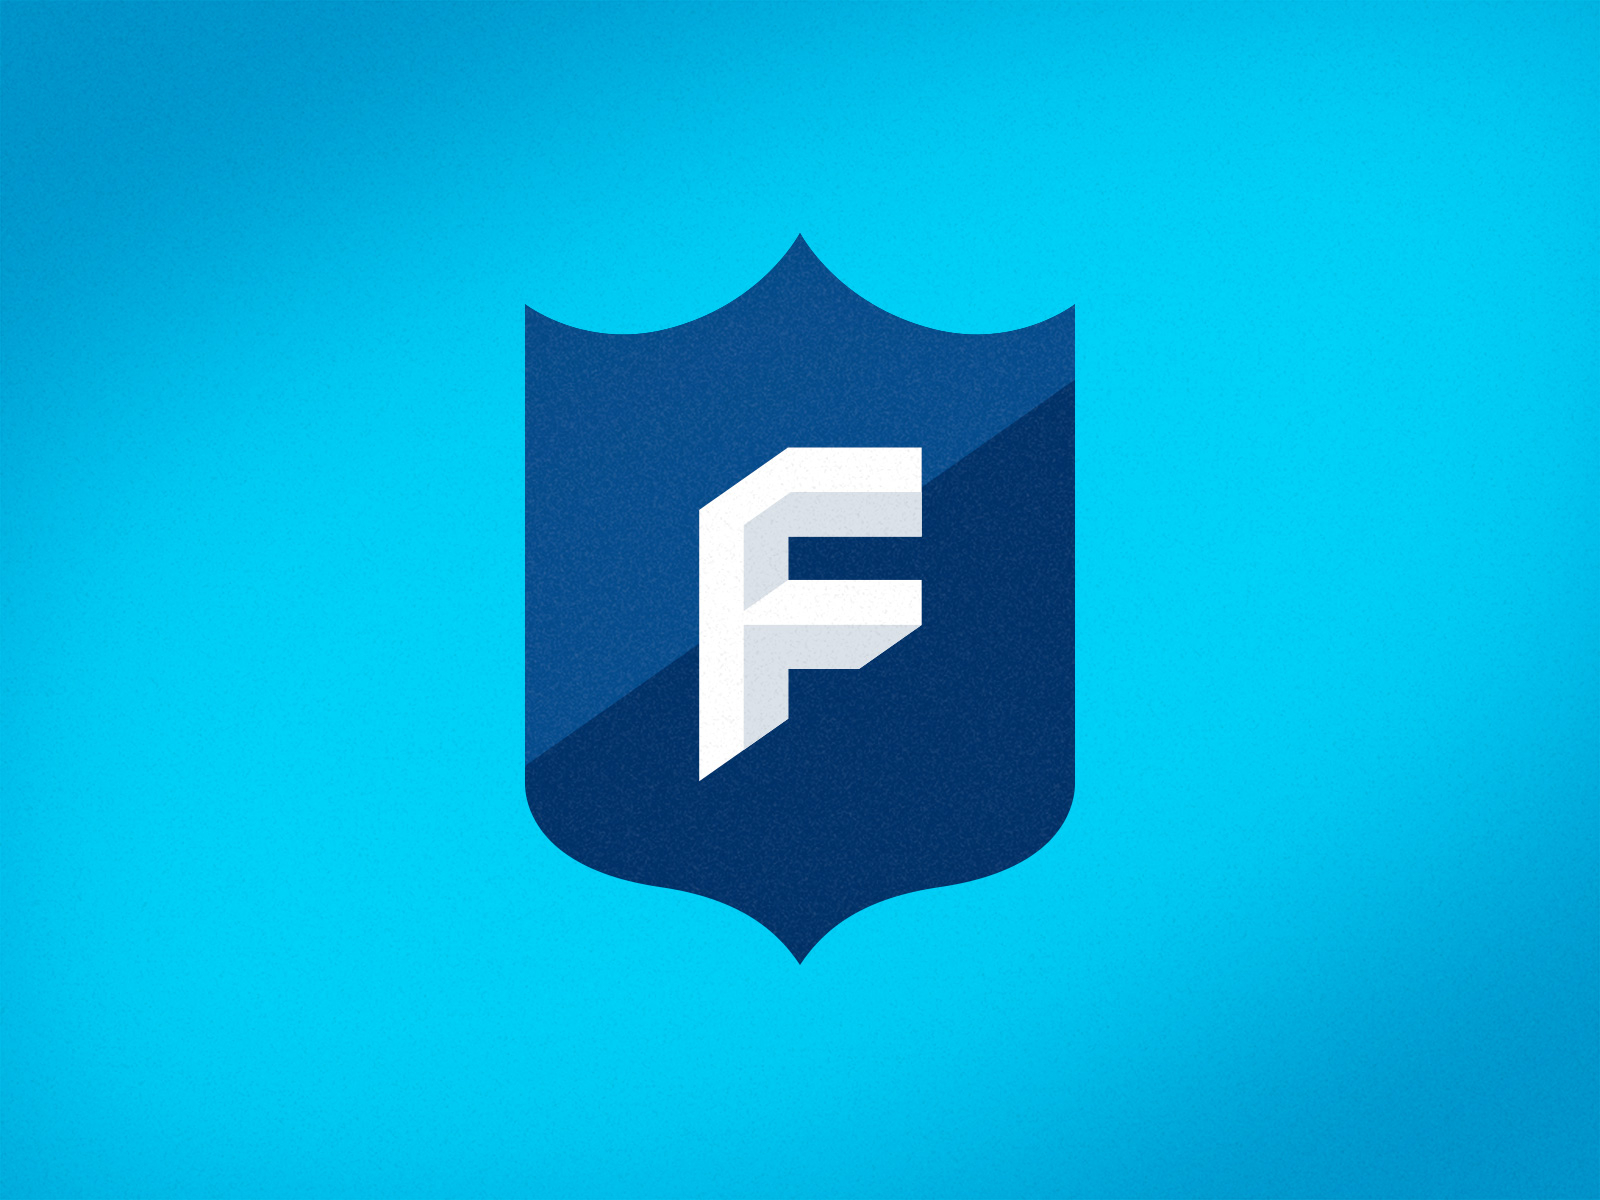 fantasy football logo